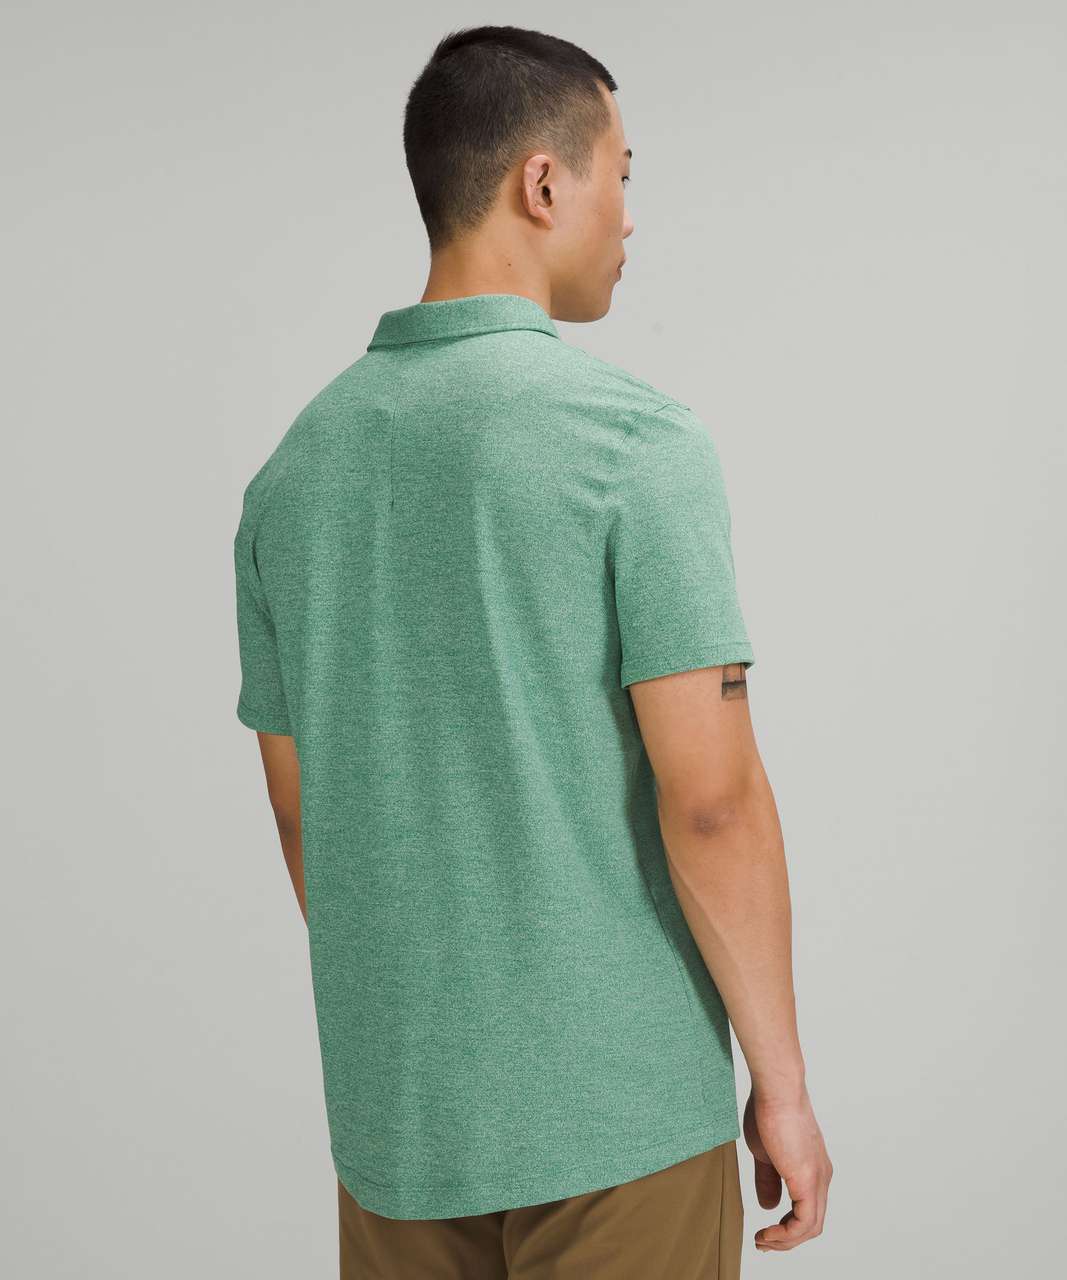 Lululemon Evolution Short Sleeve Polo Shirt *Pique Fabric - Heathered Everglade Green